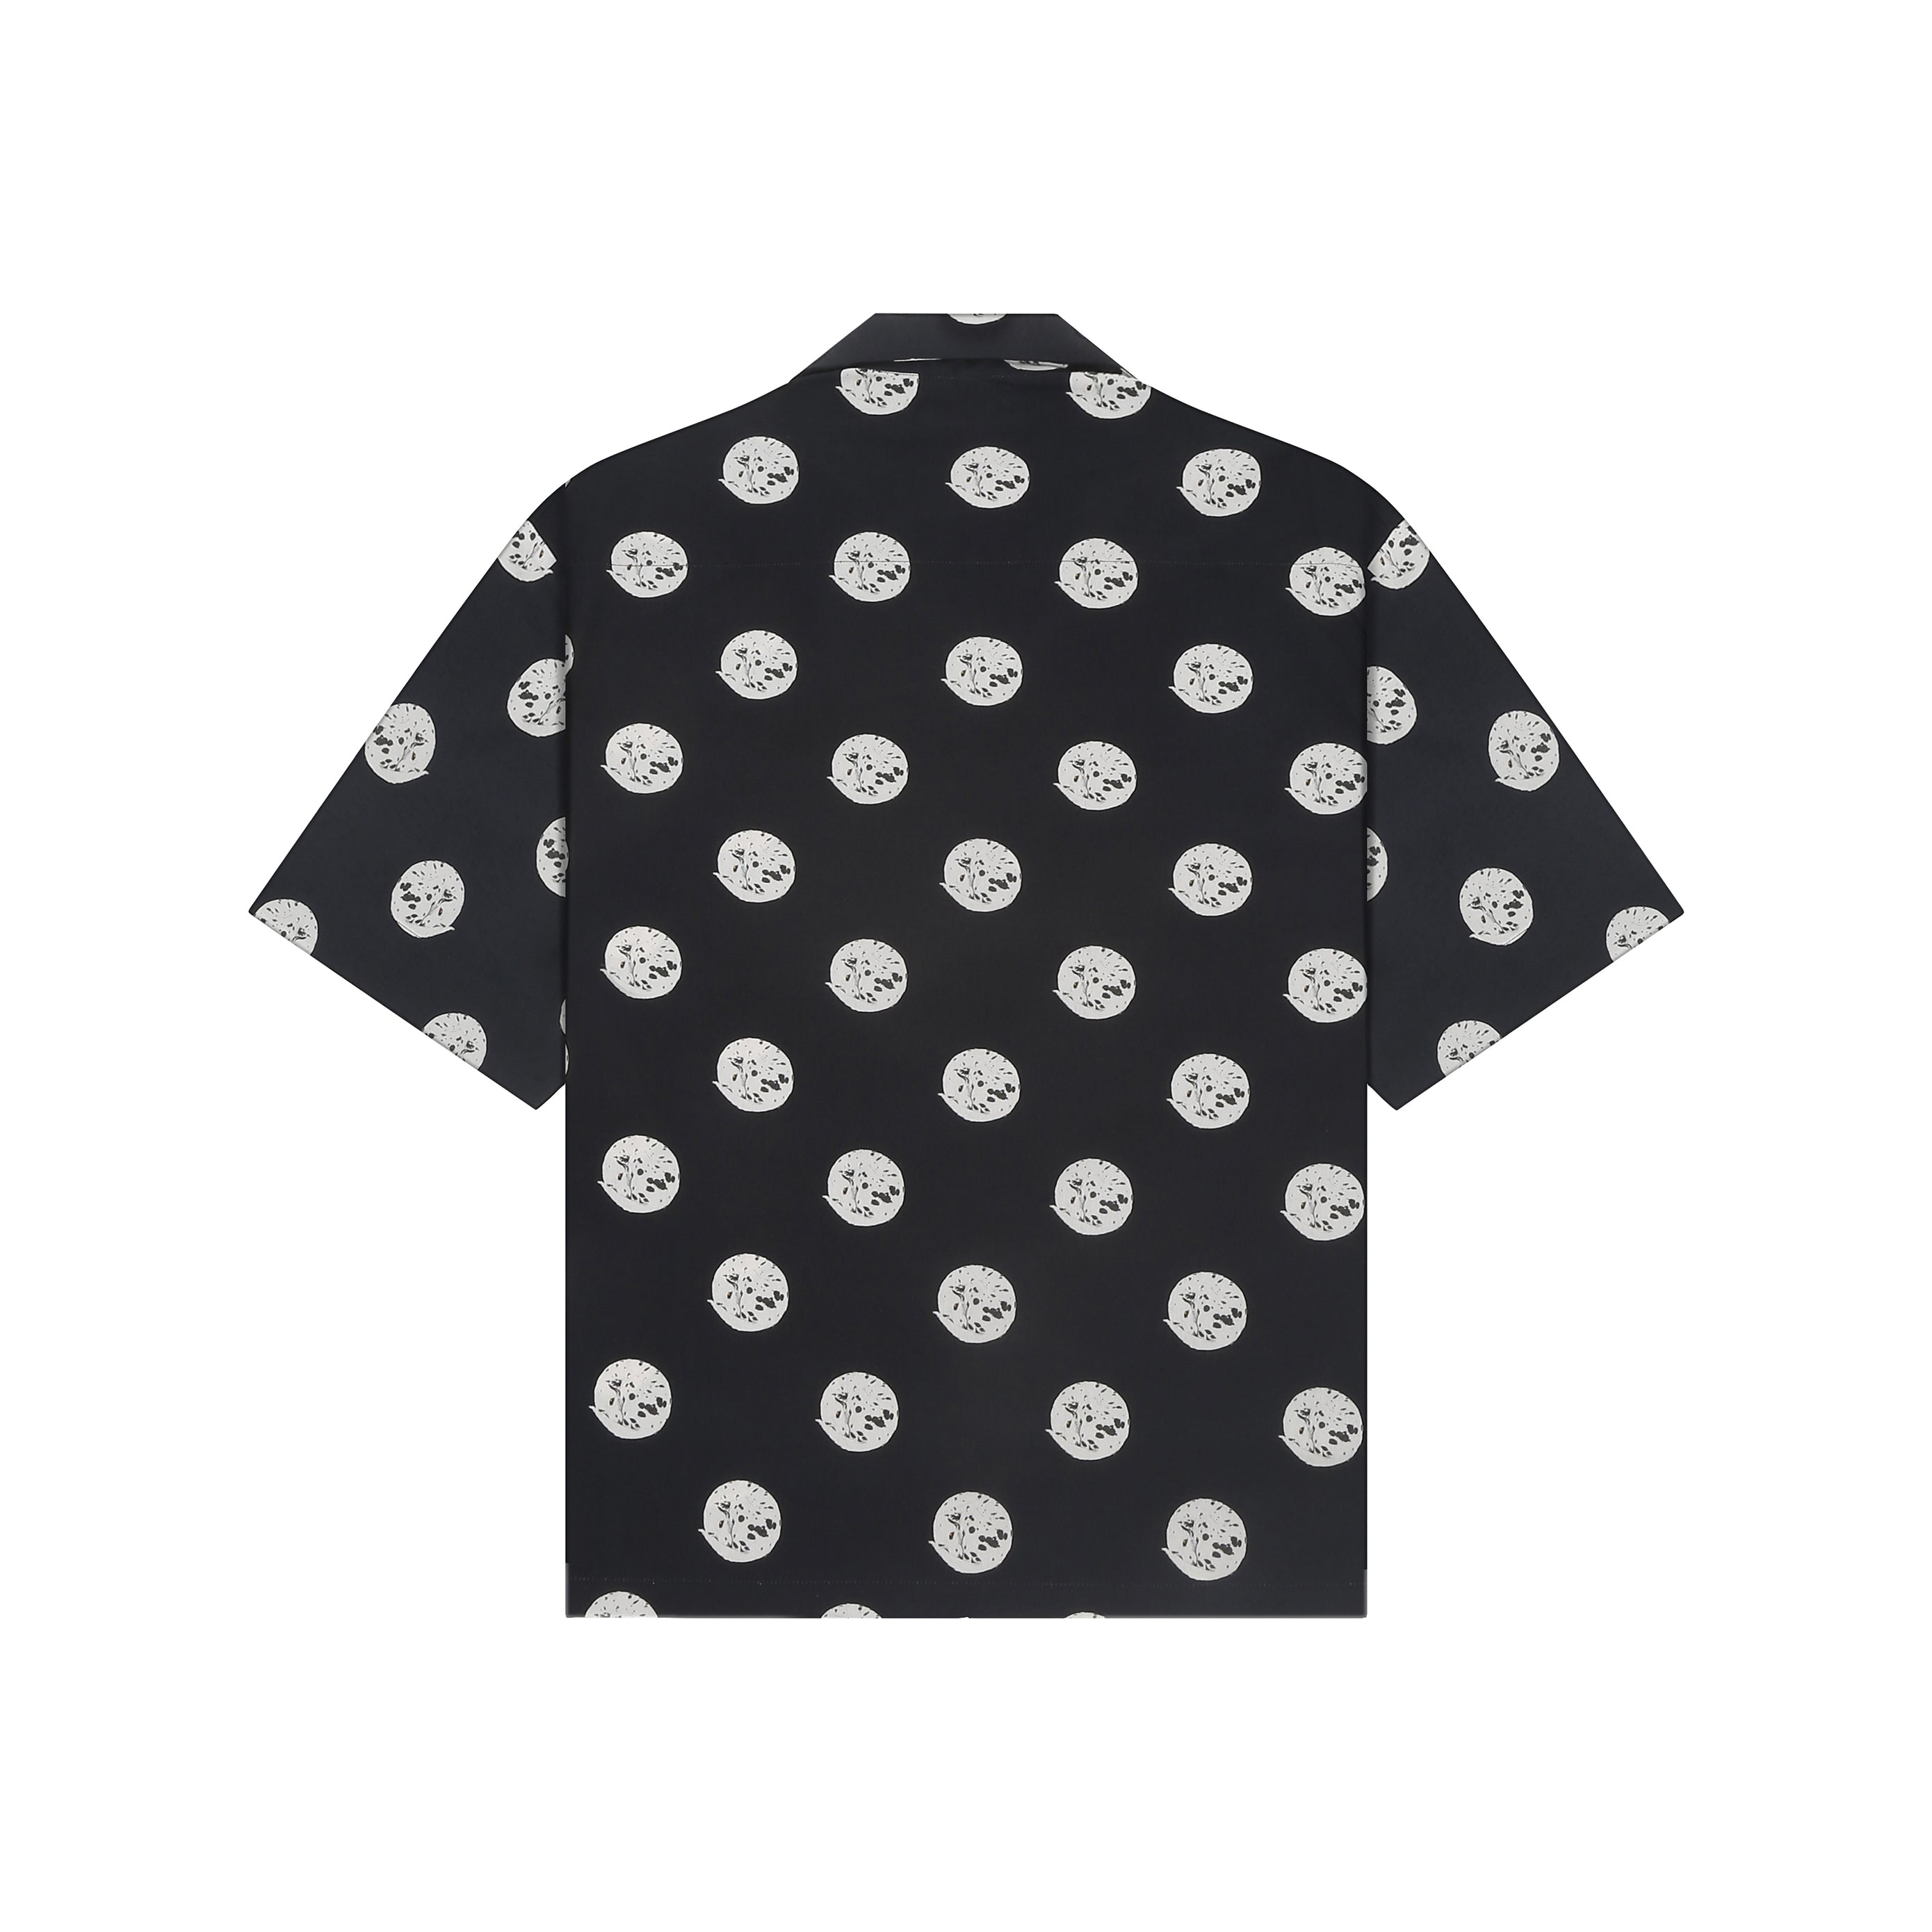 Dalmatian Shirt Black